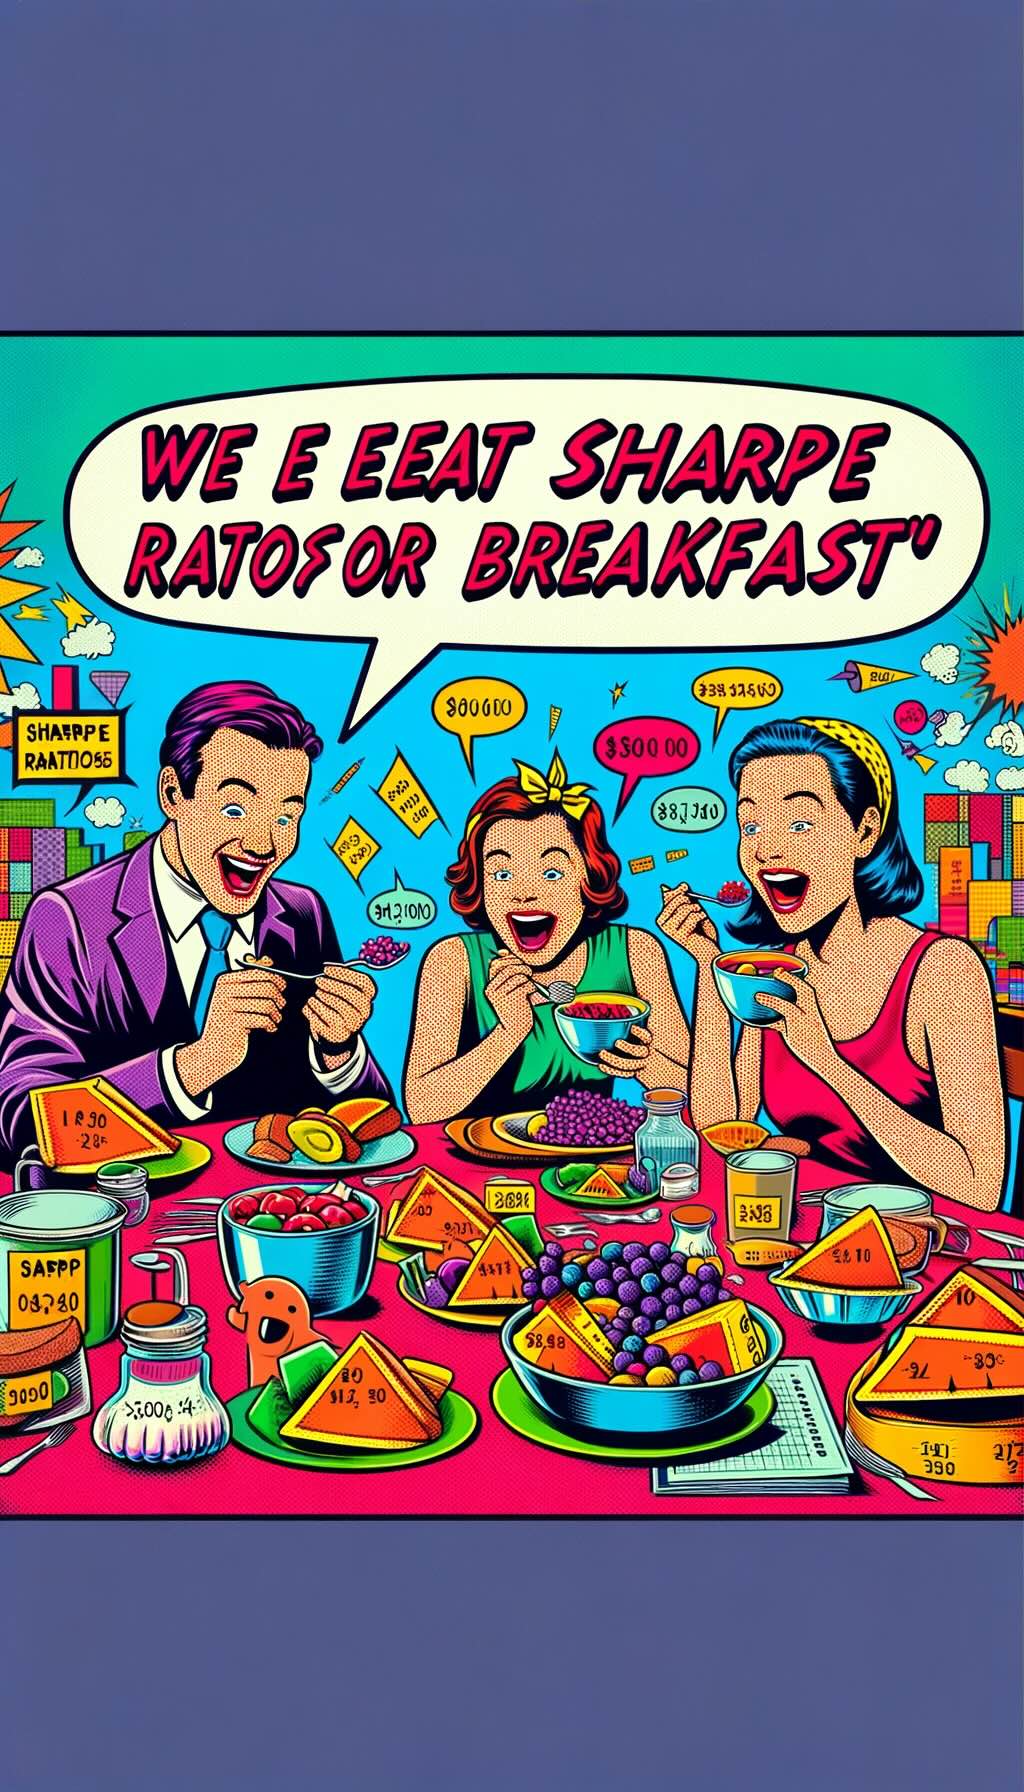 We Like To Eat Sharpe Ratios For Breakfast 